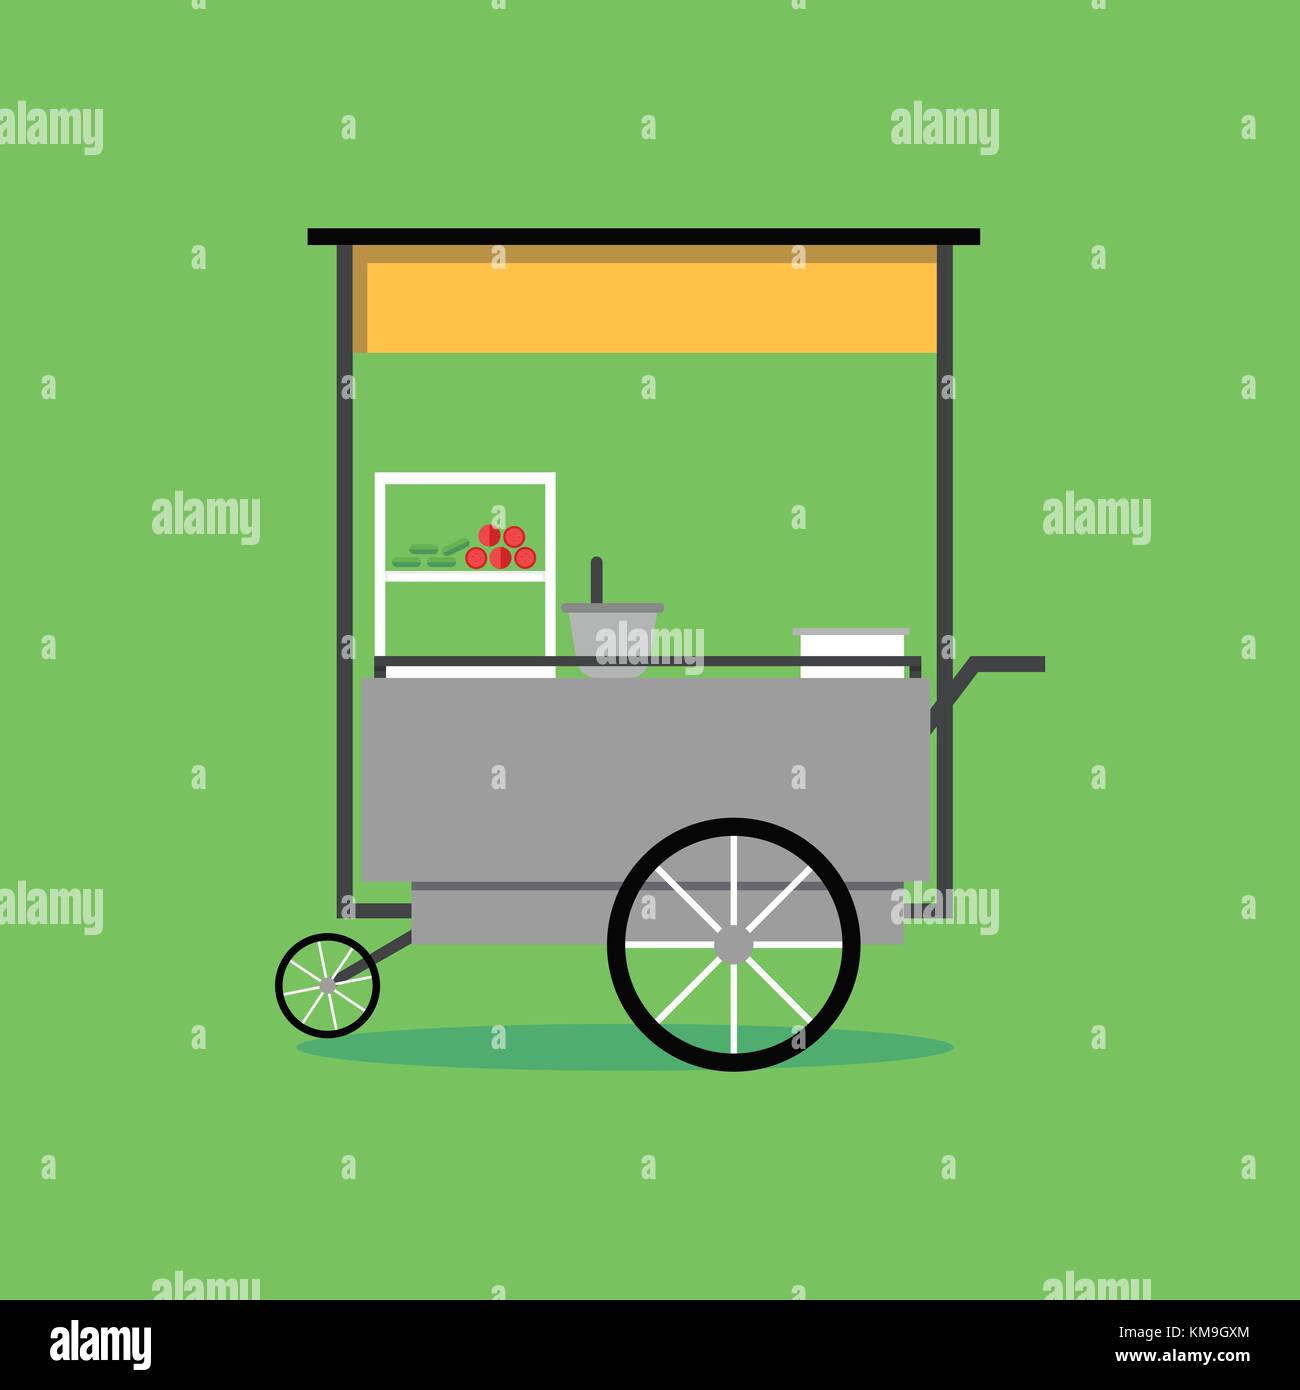 Flat Thai street food vending cart with green background vector illustration .Papaya salad spicy cart on wheel. Stock Vector